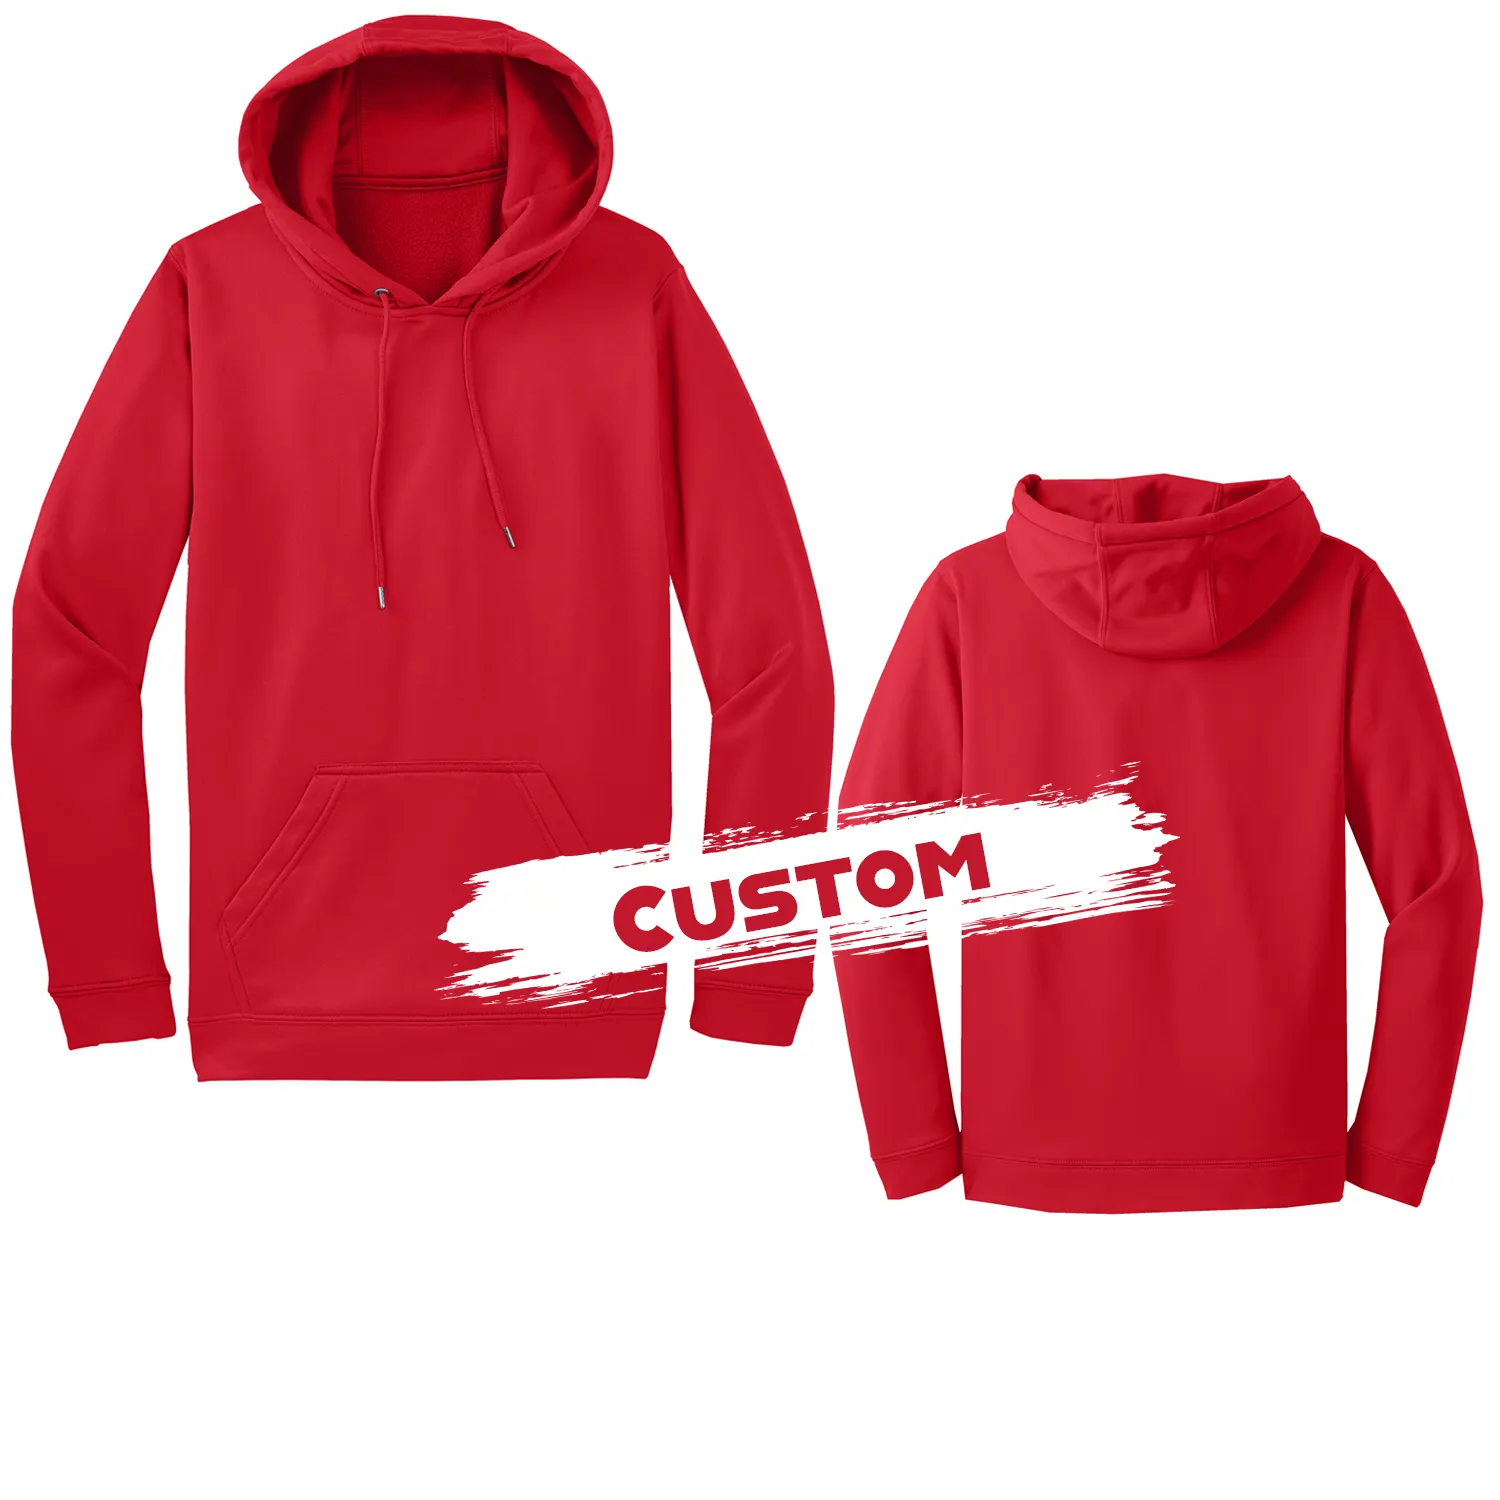 Xite Sport Premium Kwaliteit Merk Stijlvolle Rode Kleur Trui Hoodie Voor Heren Aankoop Groothandel En Retail Trui Hoodies